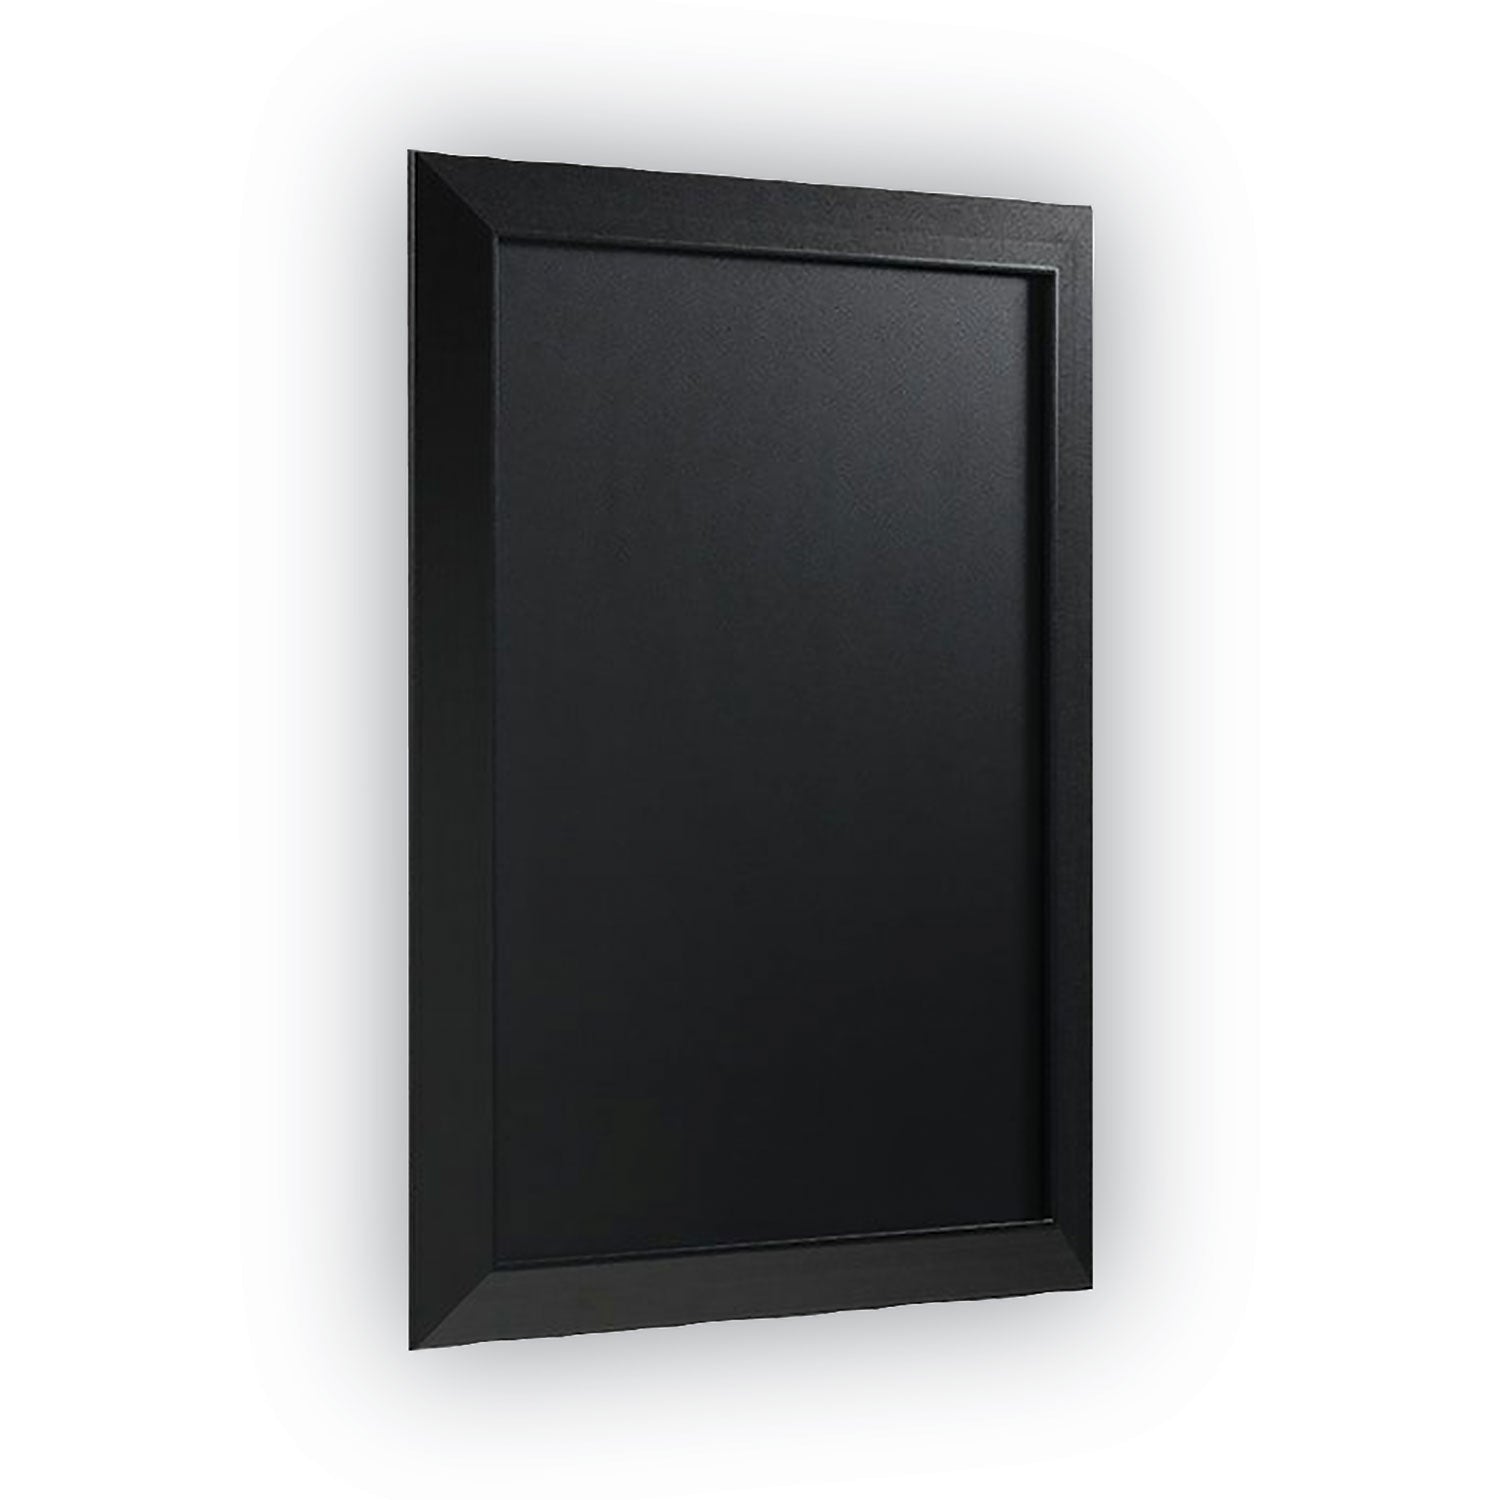 Kamashi Chalk Board, 36 x 24, Black Surface, Black Wood Frame - 